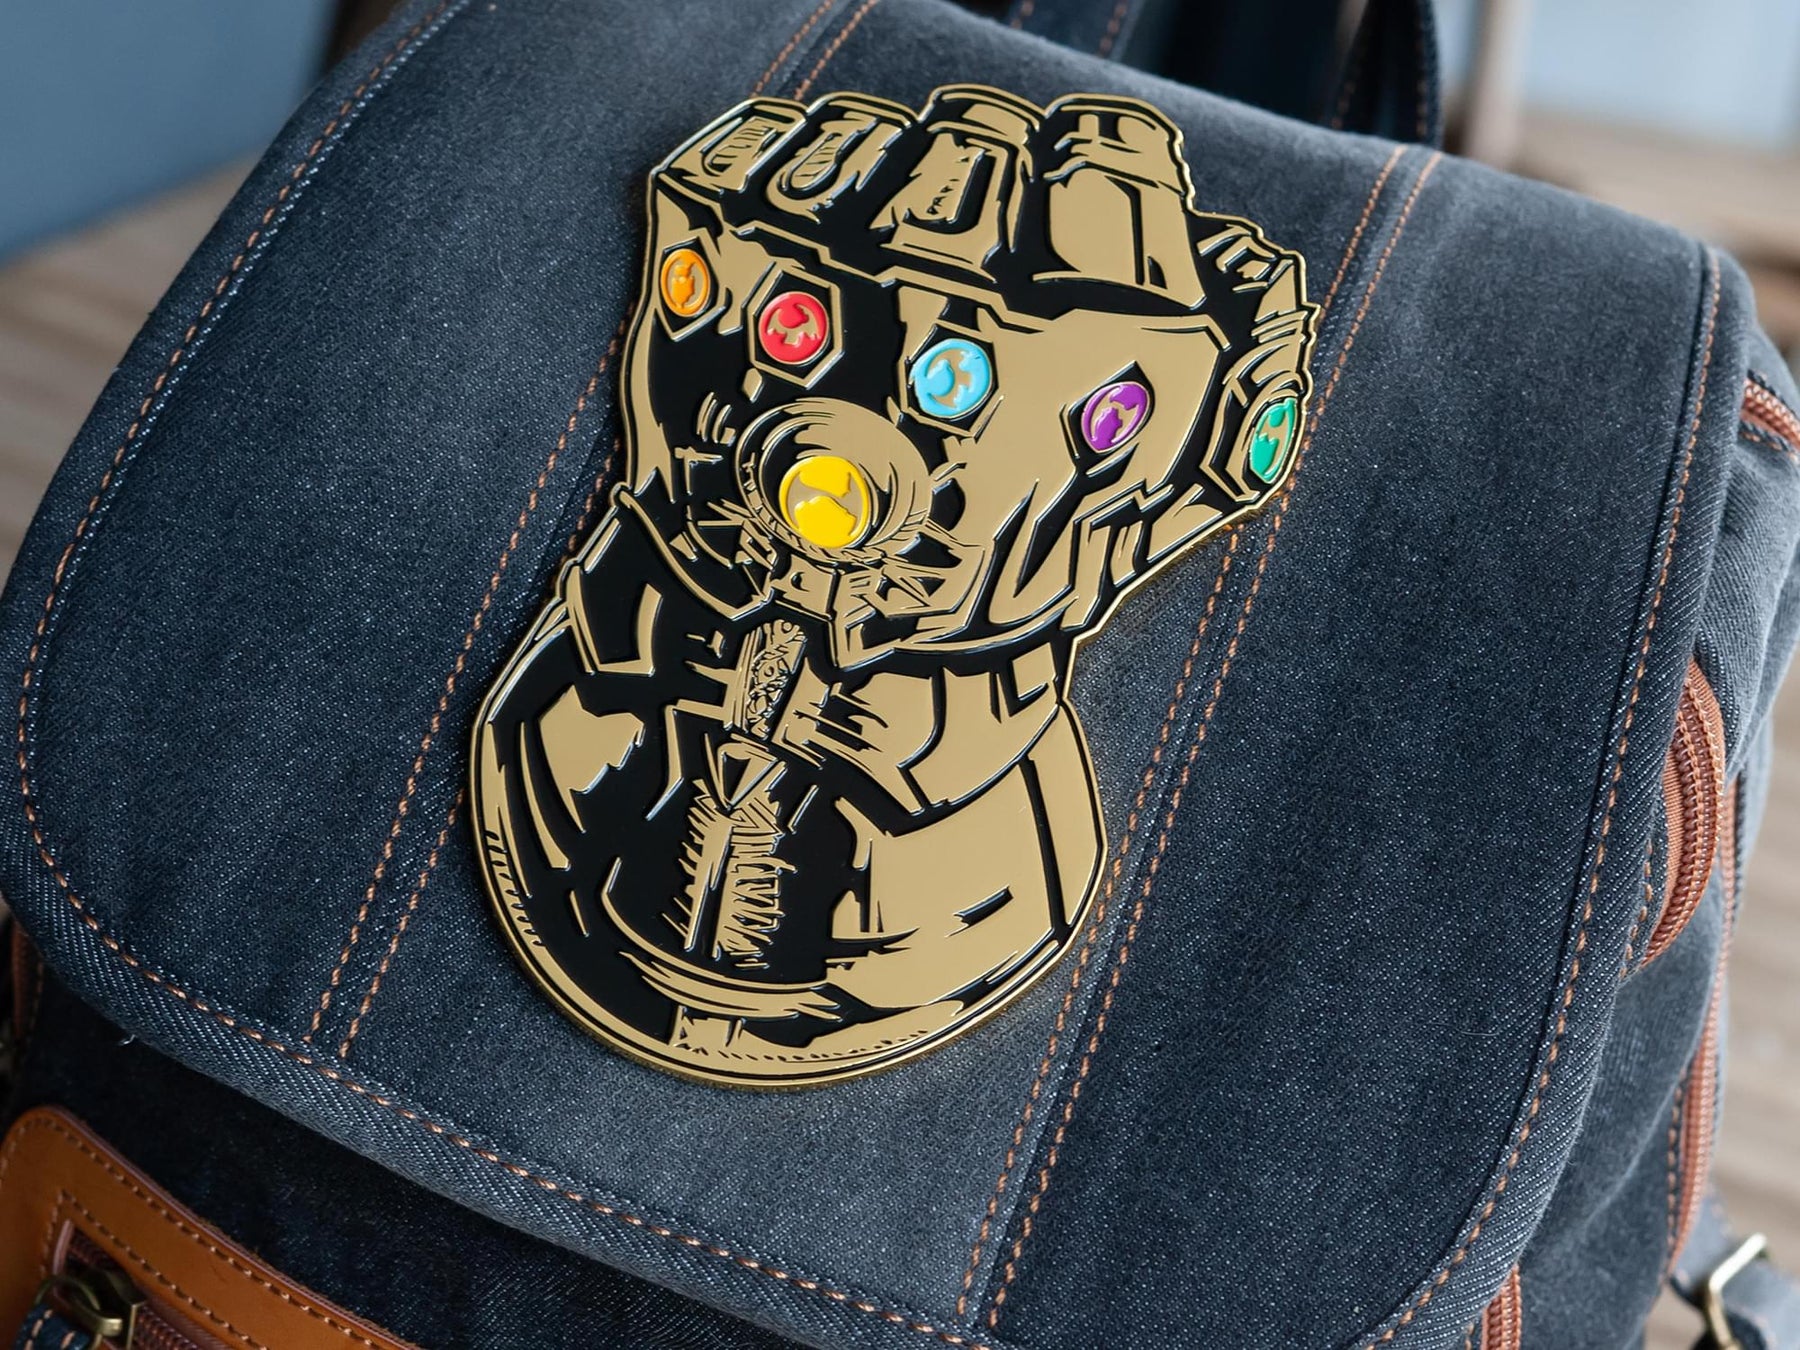 Marvel Avengers: Endgame Infinity Gauntlet Pin | Huge Oversize Pin | 6 Inches